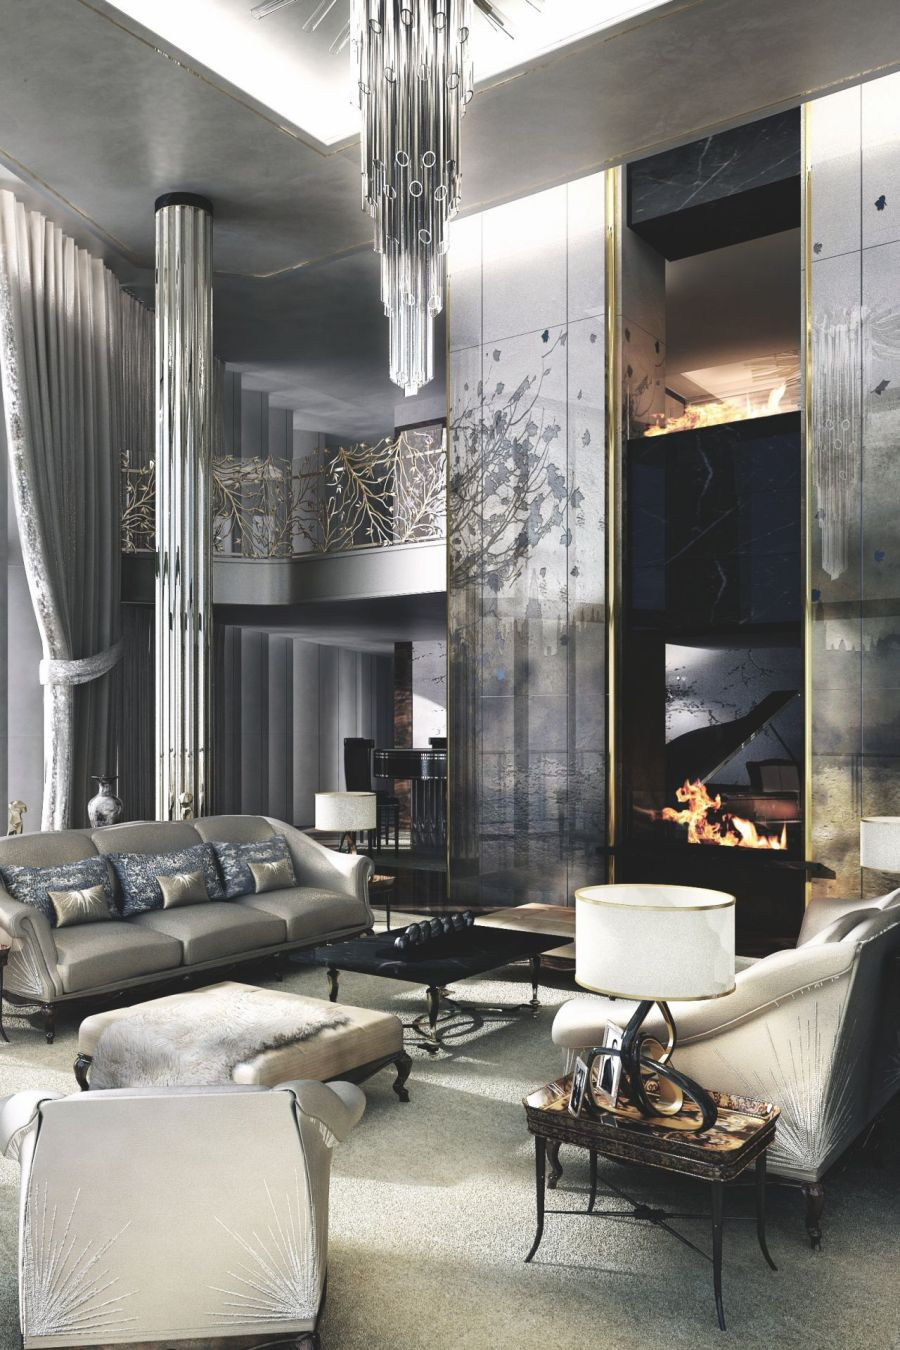 Glam Living Room Decor
 Interior Design Ideas For A Glamorous Living Room